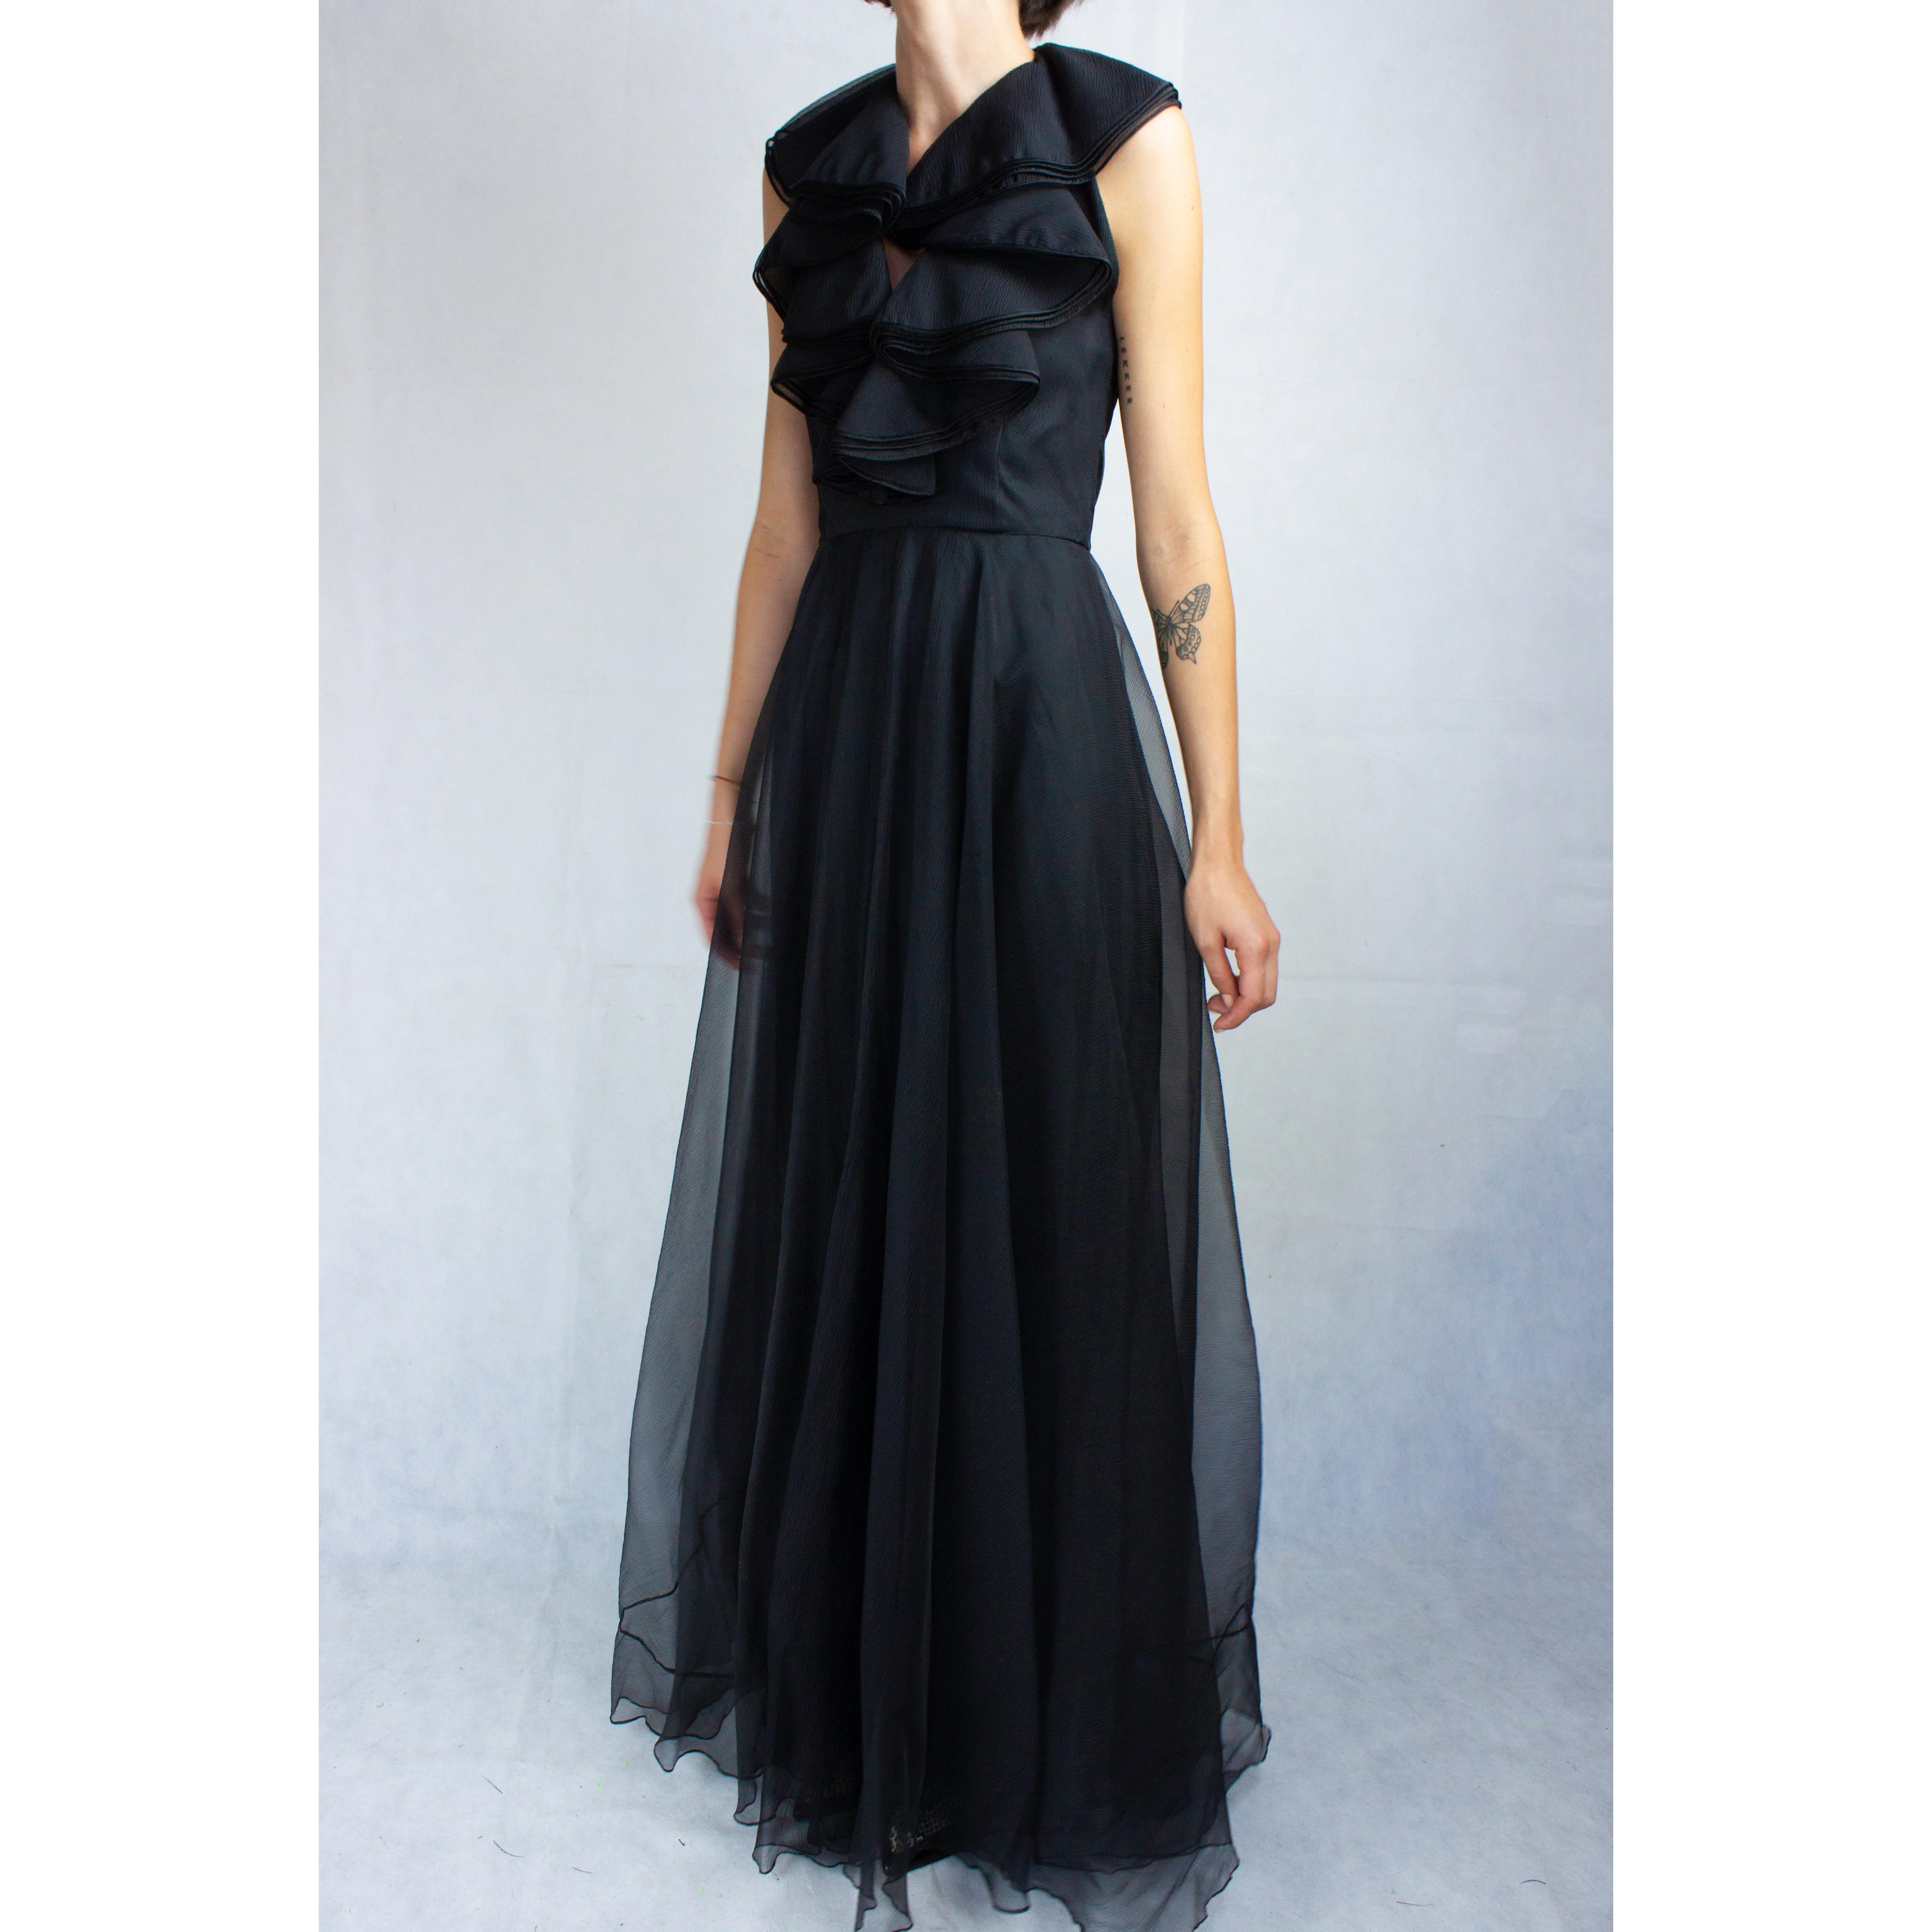 christian dior black dress